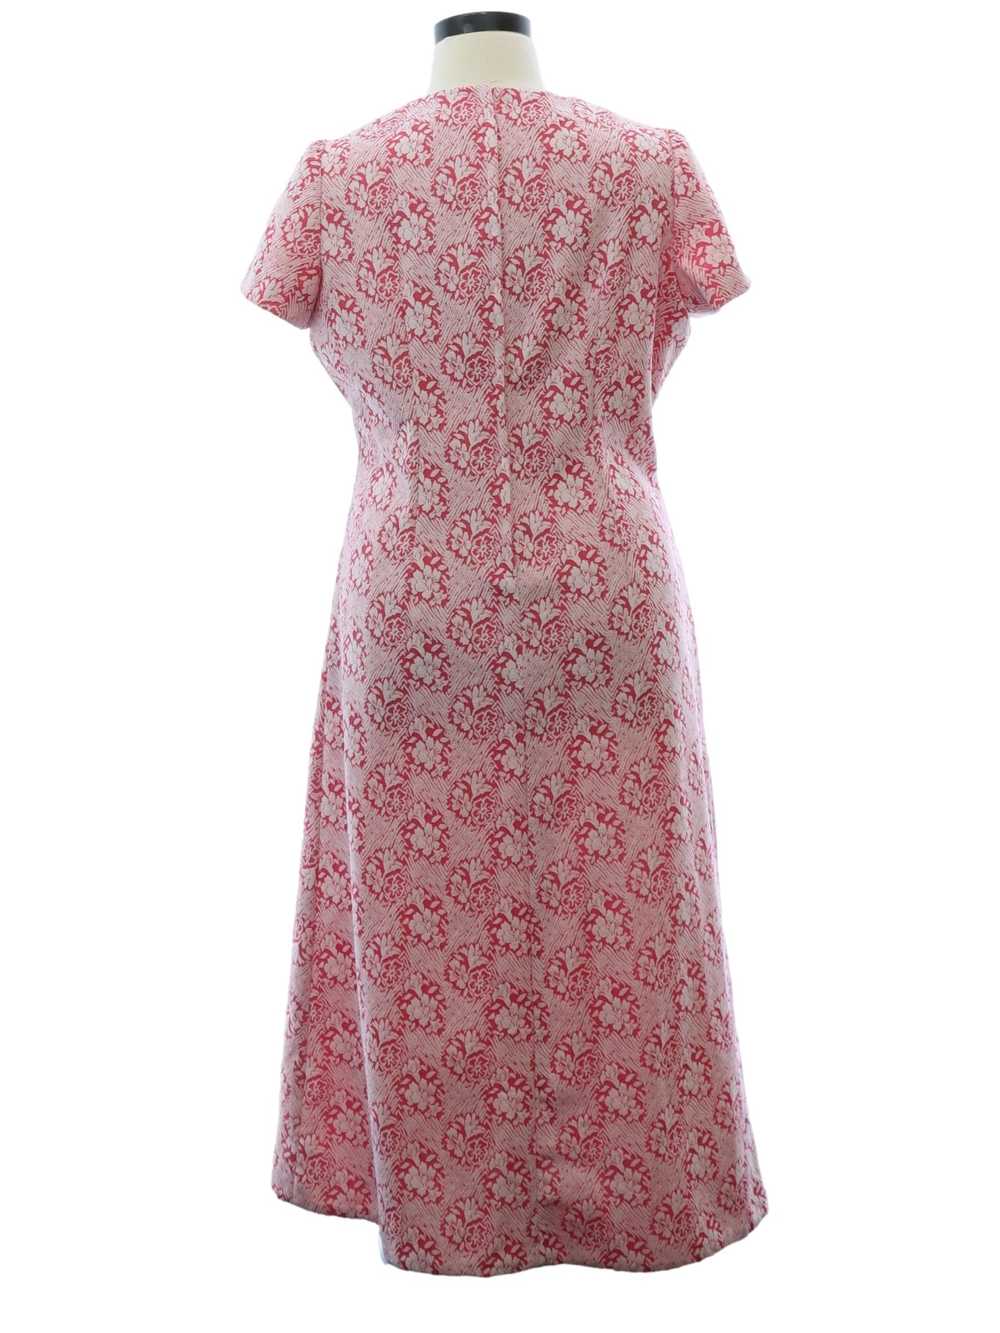 1960's Mod Knit Maxi Dress - image 3